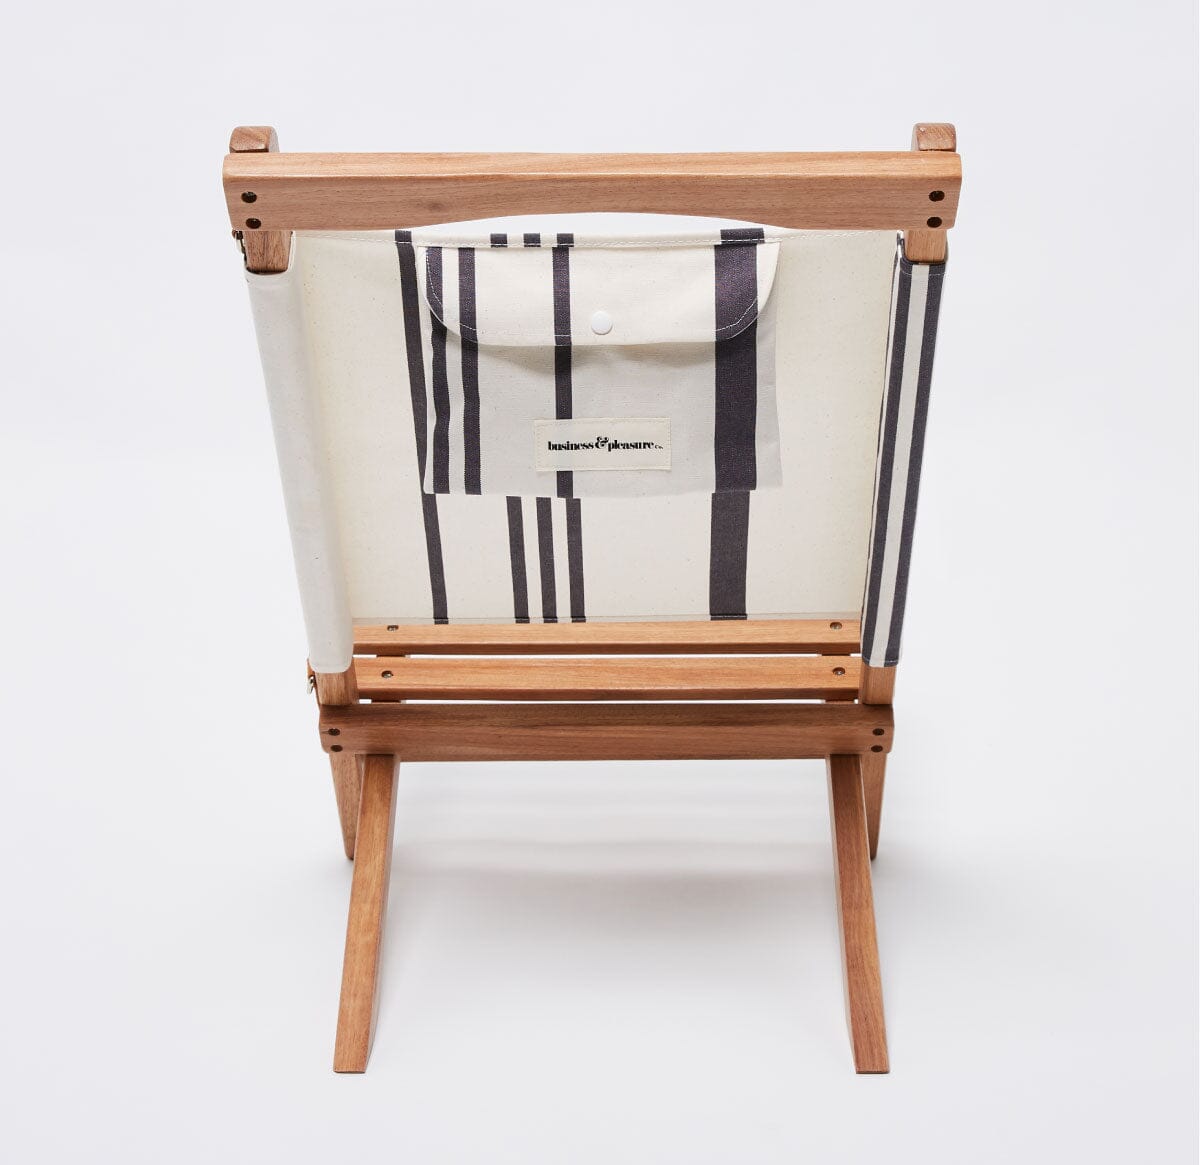 The 2-Piece Chair - Vintage Black Stripe